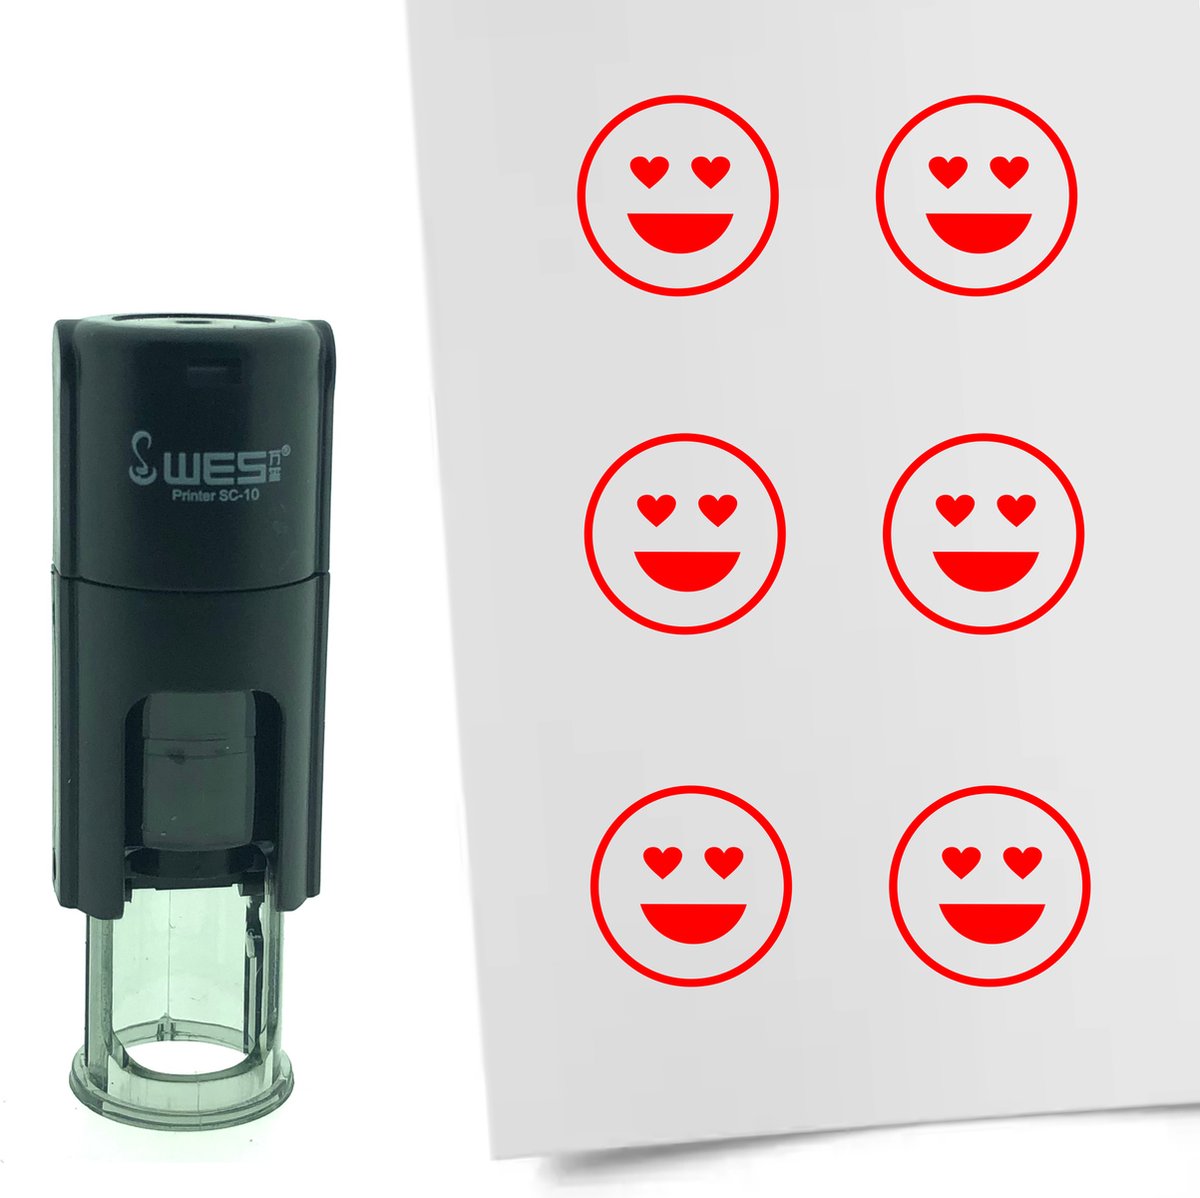 CombiCraft Stempel Smiley liefde 10mm rond - Rode inkt